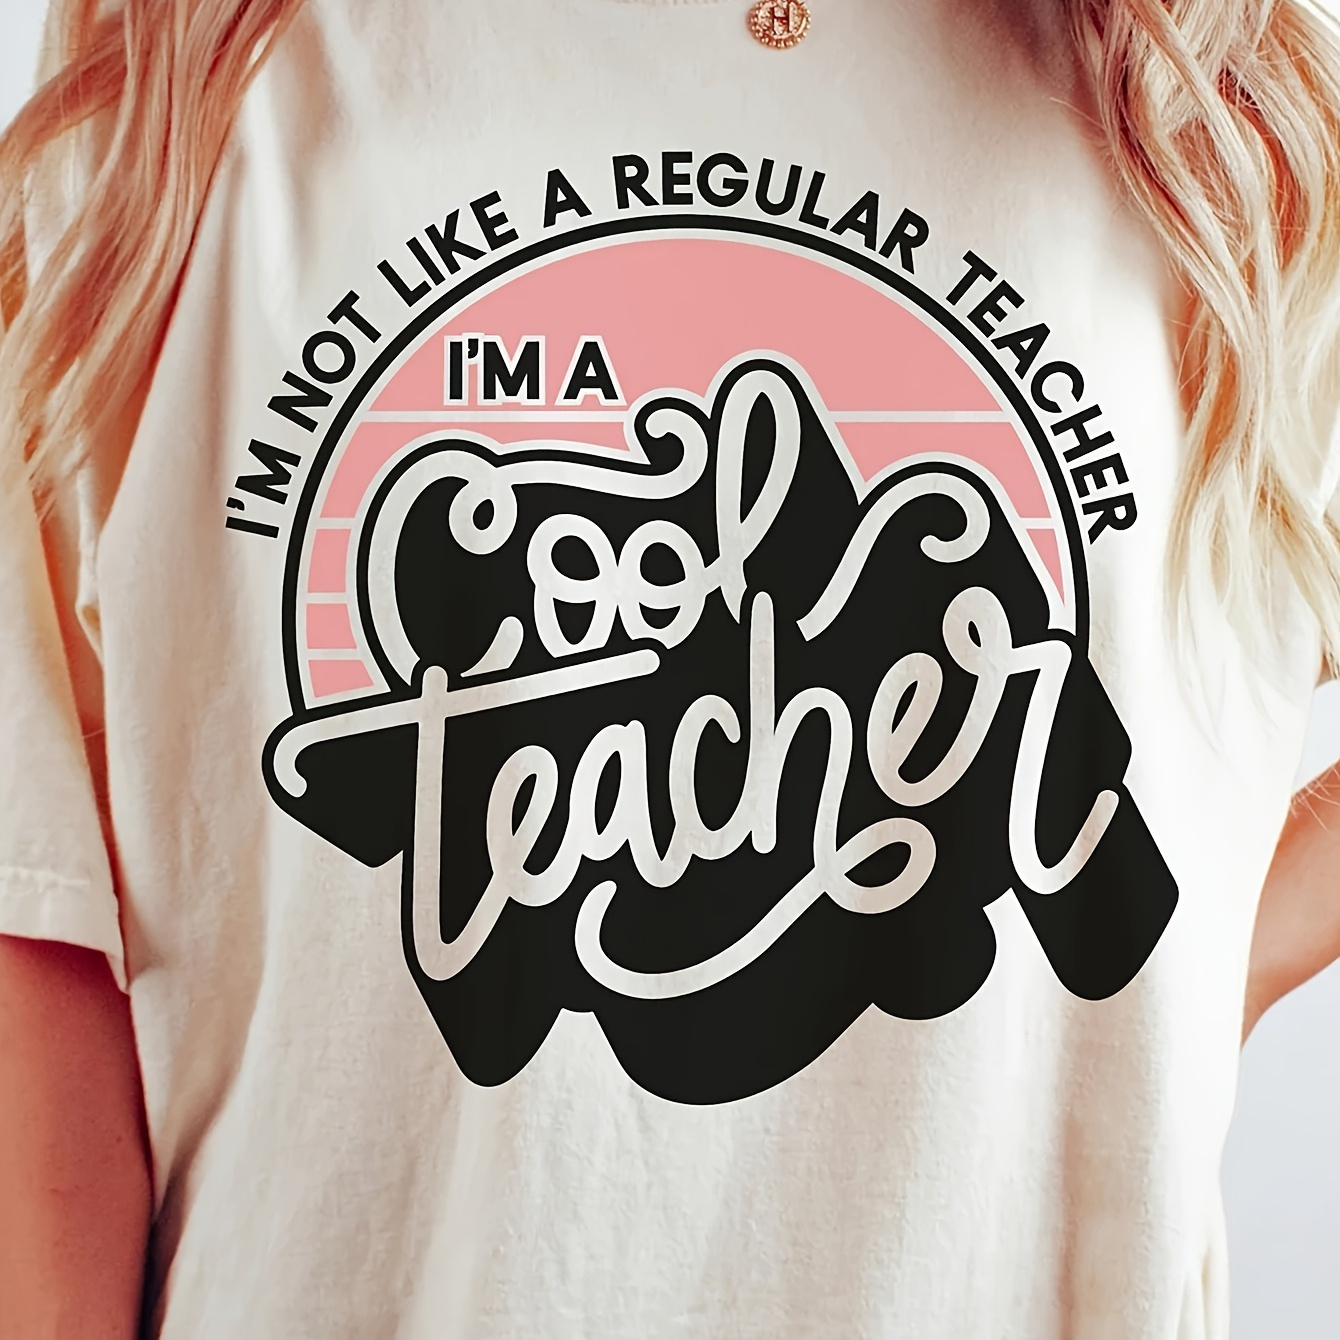 

Cool Teacher Print T-shirt, Casual Short Sleeve Crew Neck Top For Spring & Summer, Women's Clothing